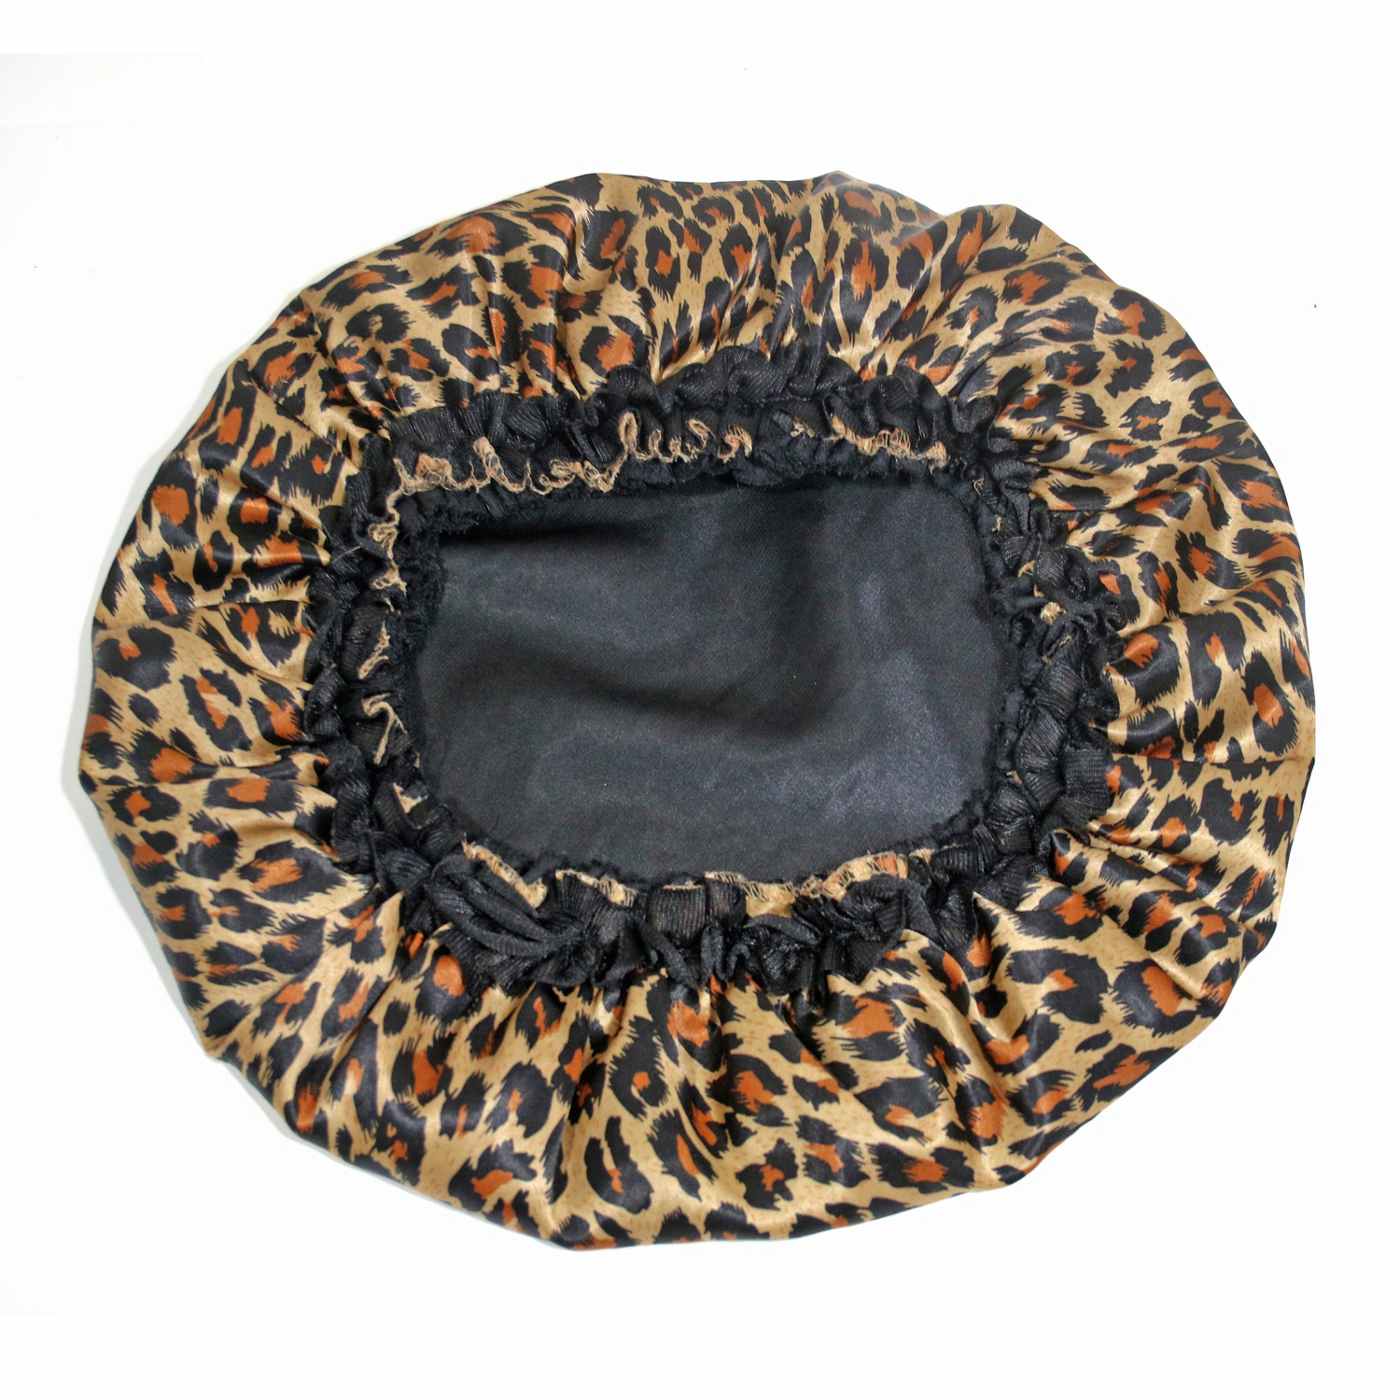 Evolve Black Satin Bonnet - Cheetah Print; image 3 of 4